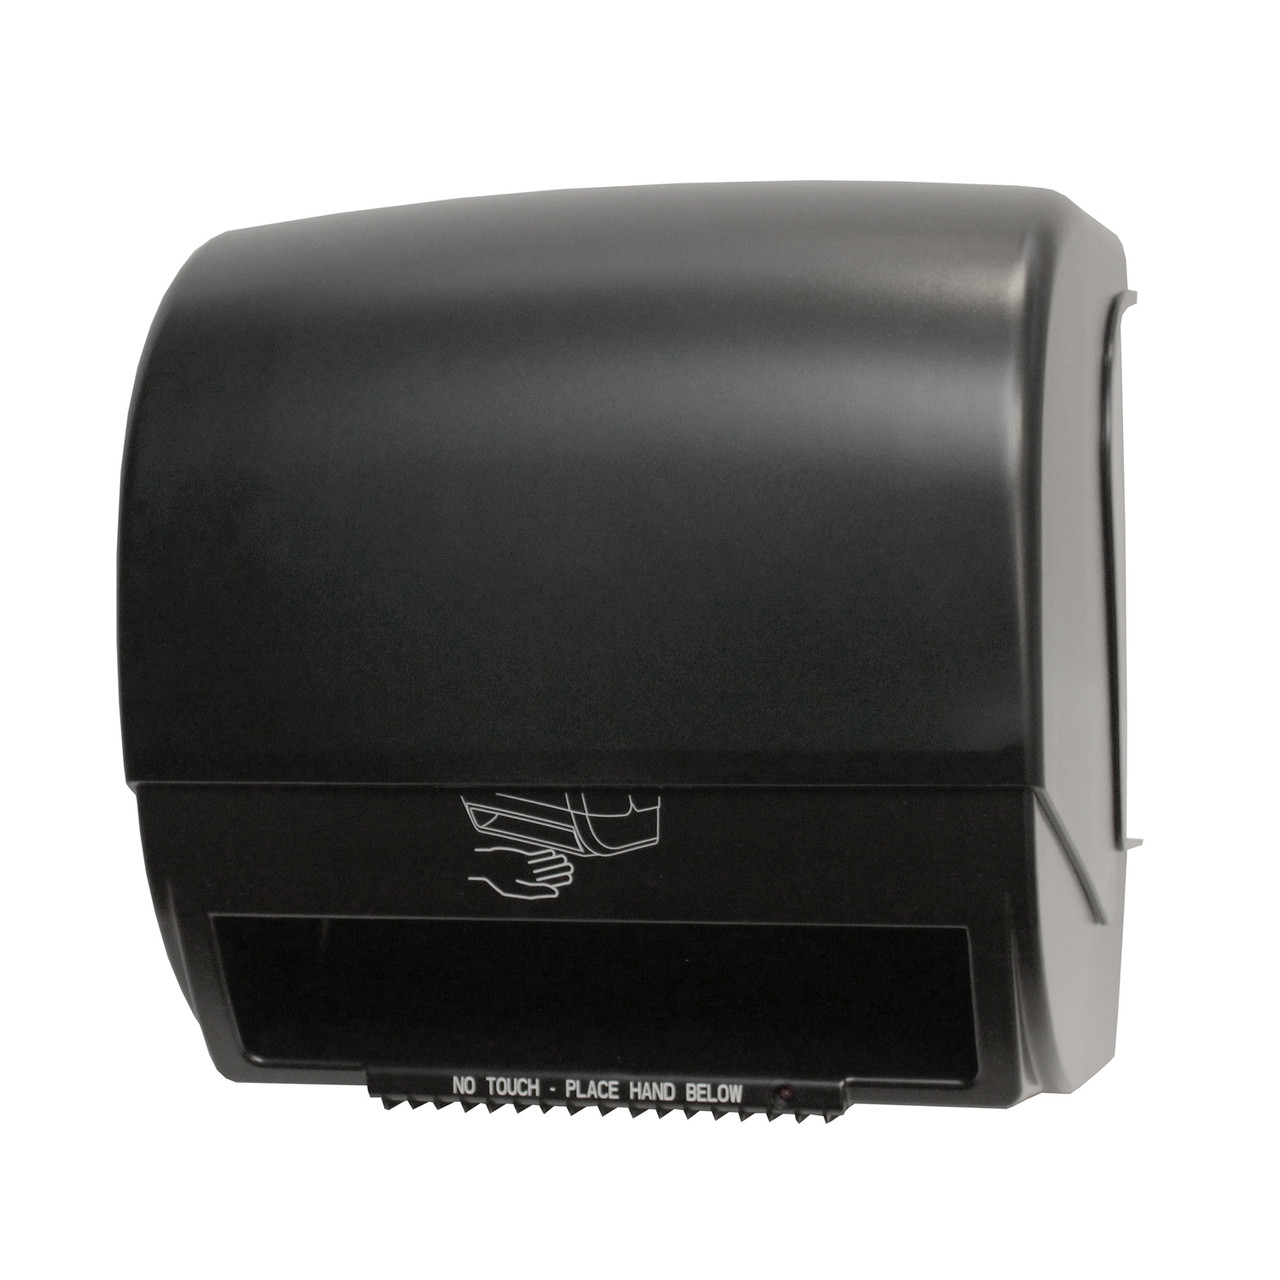 Palmer Fixture Electronic Hands Free Roll Paper Towel Dispenser - 6” Black Translucent TD0234-02